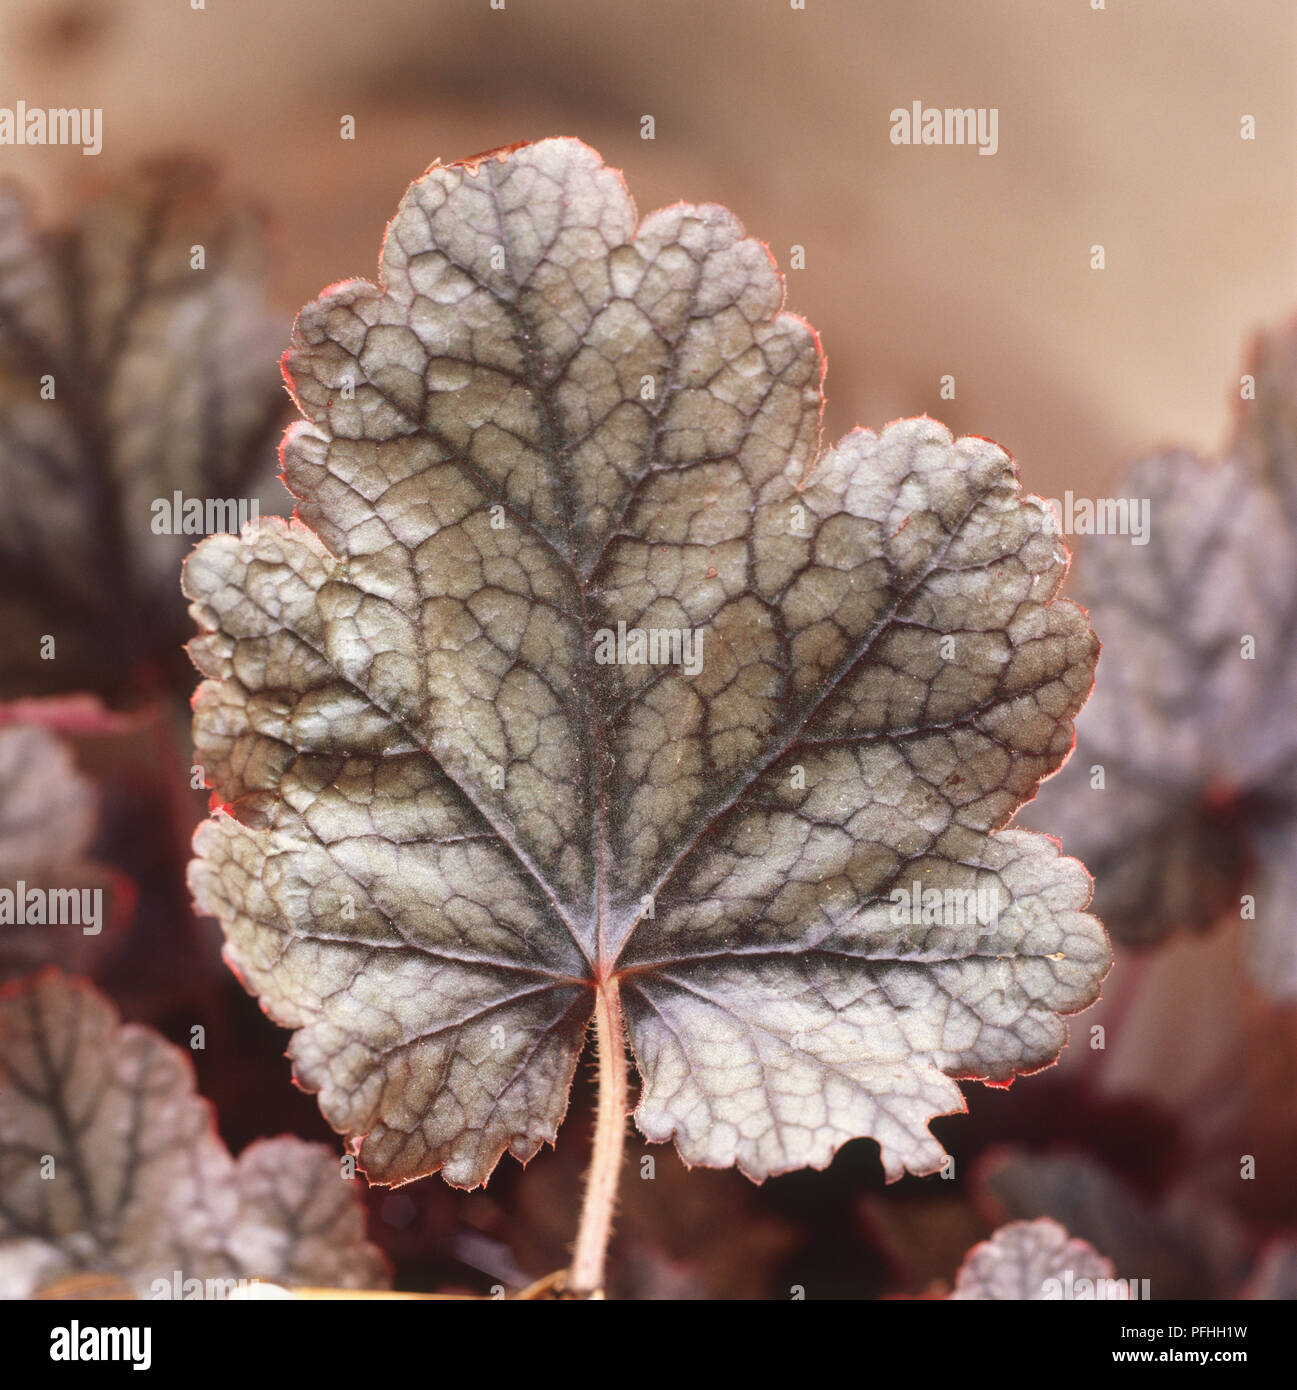 Heuchera 'Silver Scrolls', silver cabbage like leafed plant. Stock Photo